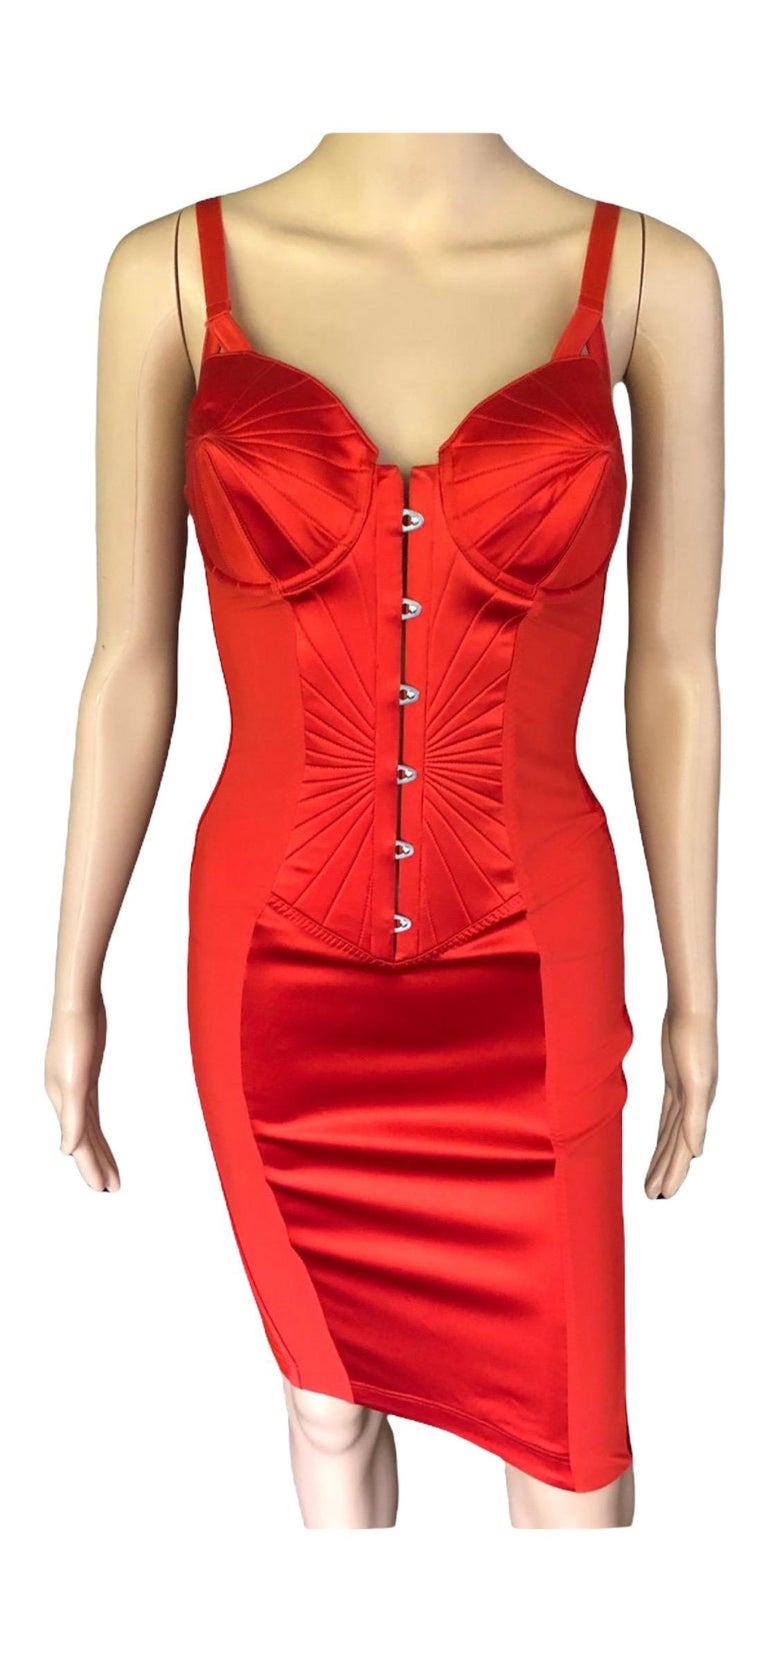 Jean Paul Gaultier for La Perla c. 2010 Cone Bra Corset Bondage Red Dress For Sale 7